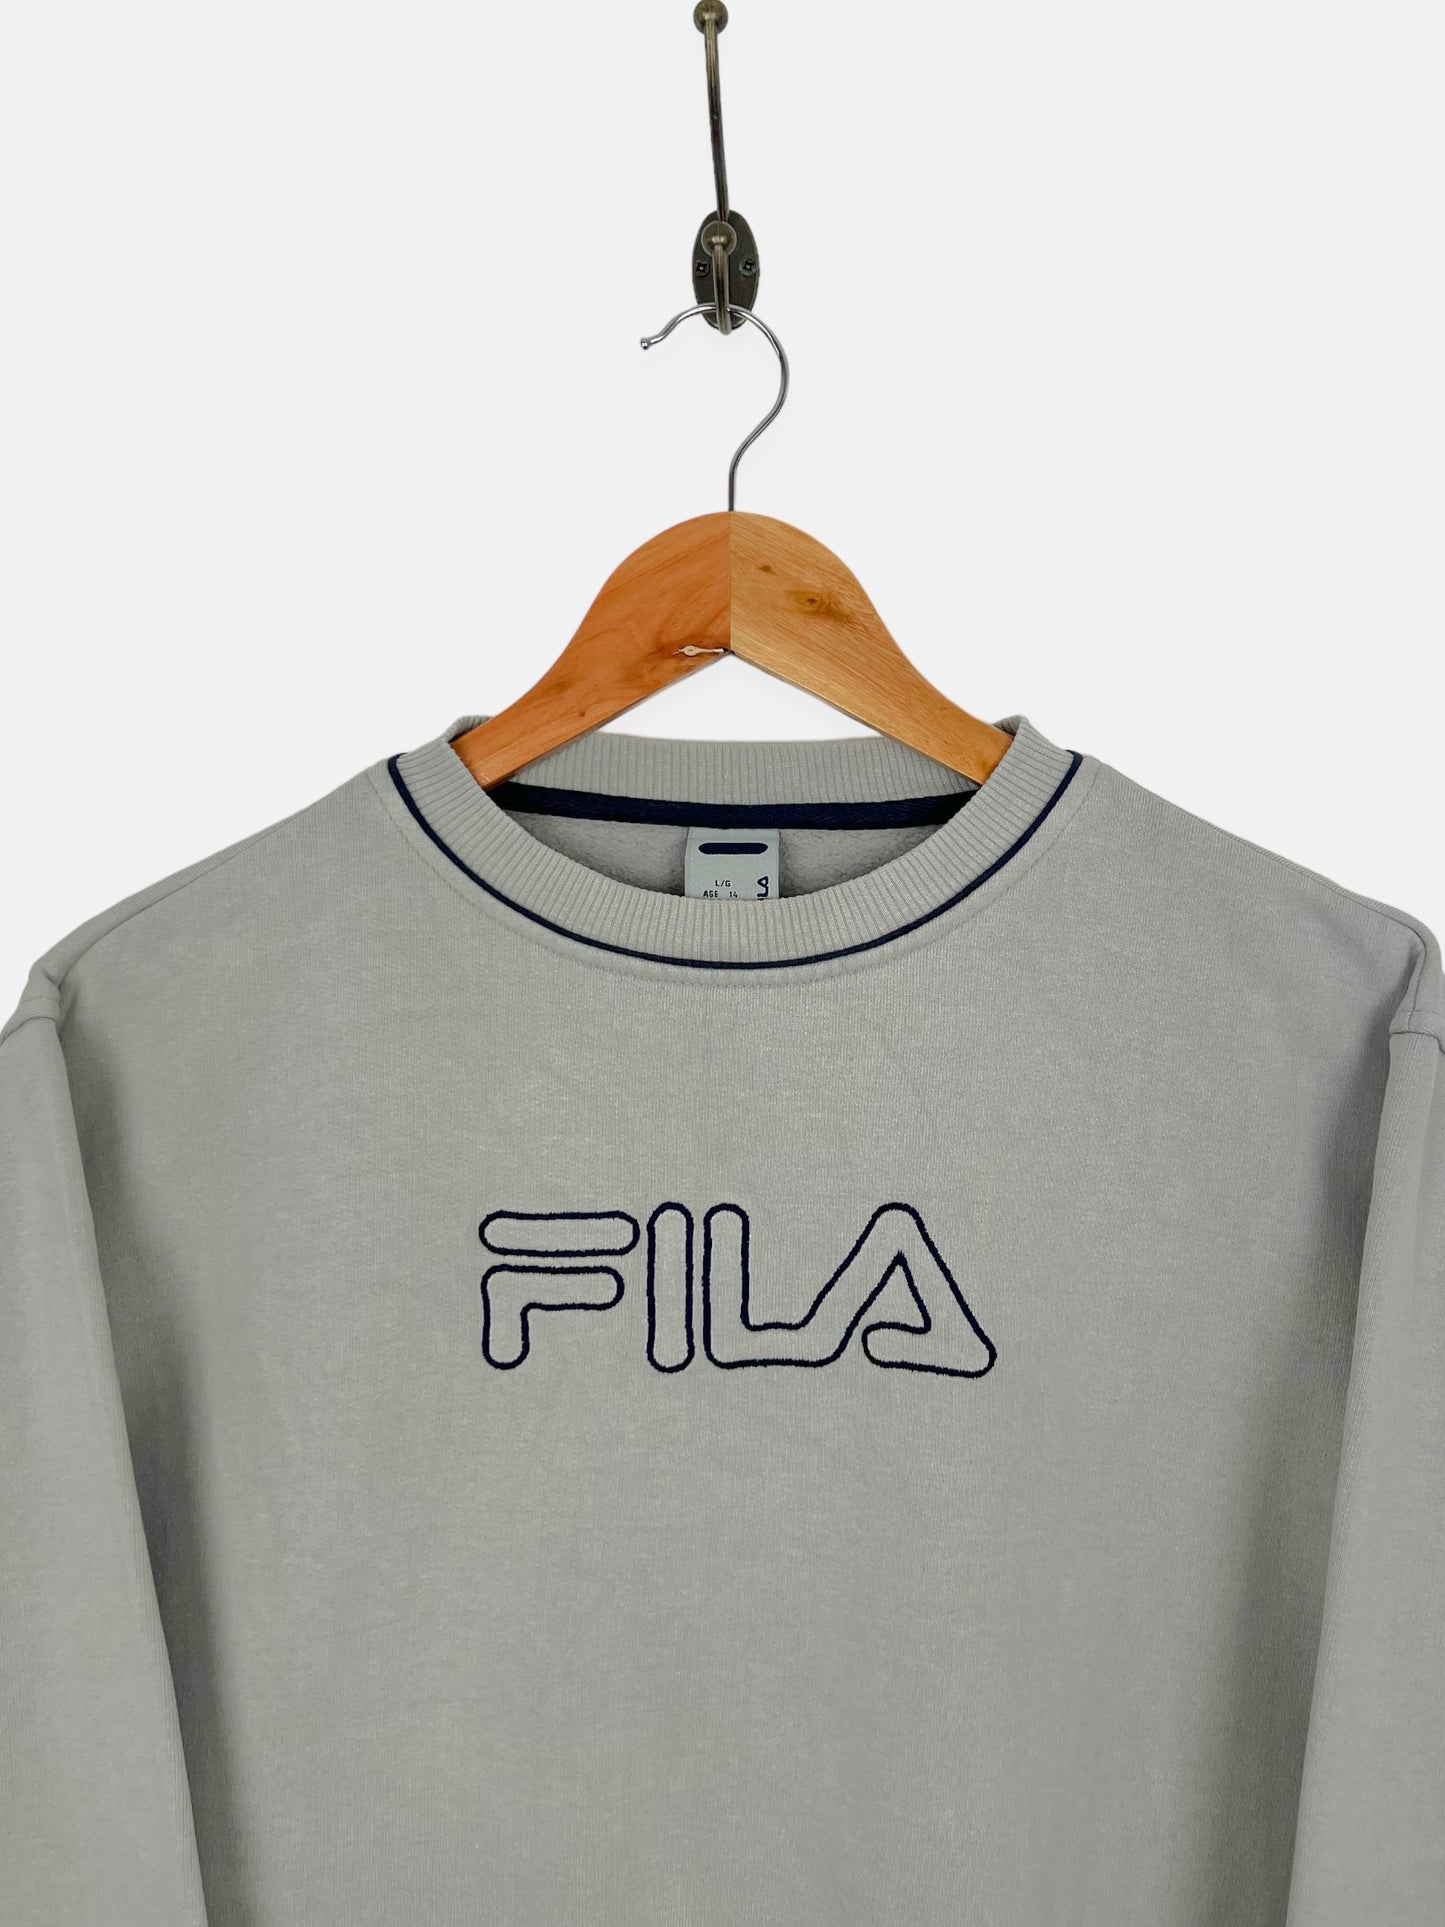 90's Fila Embroidered Vintage Sweatshirt Size 6-8